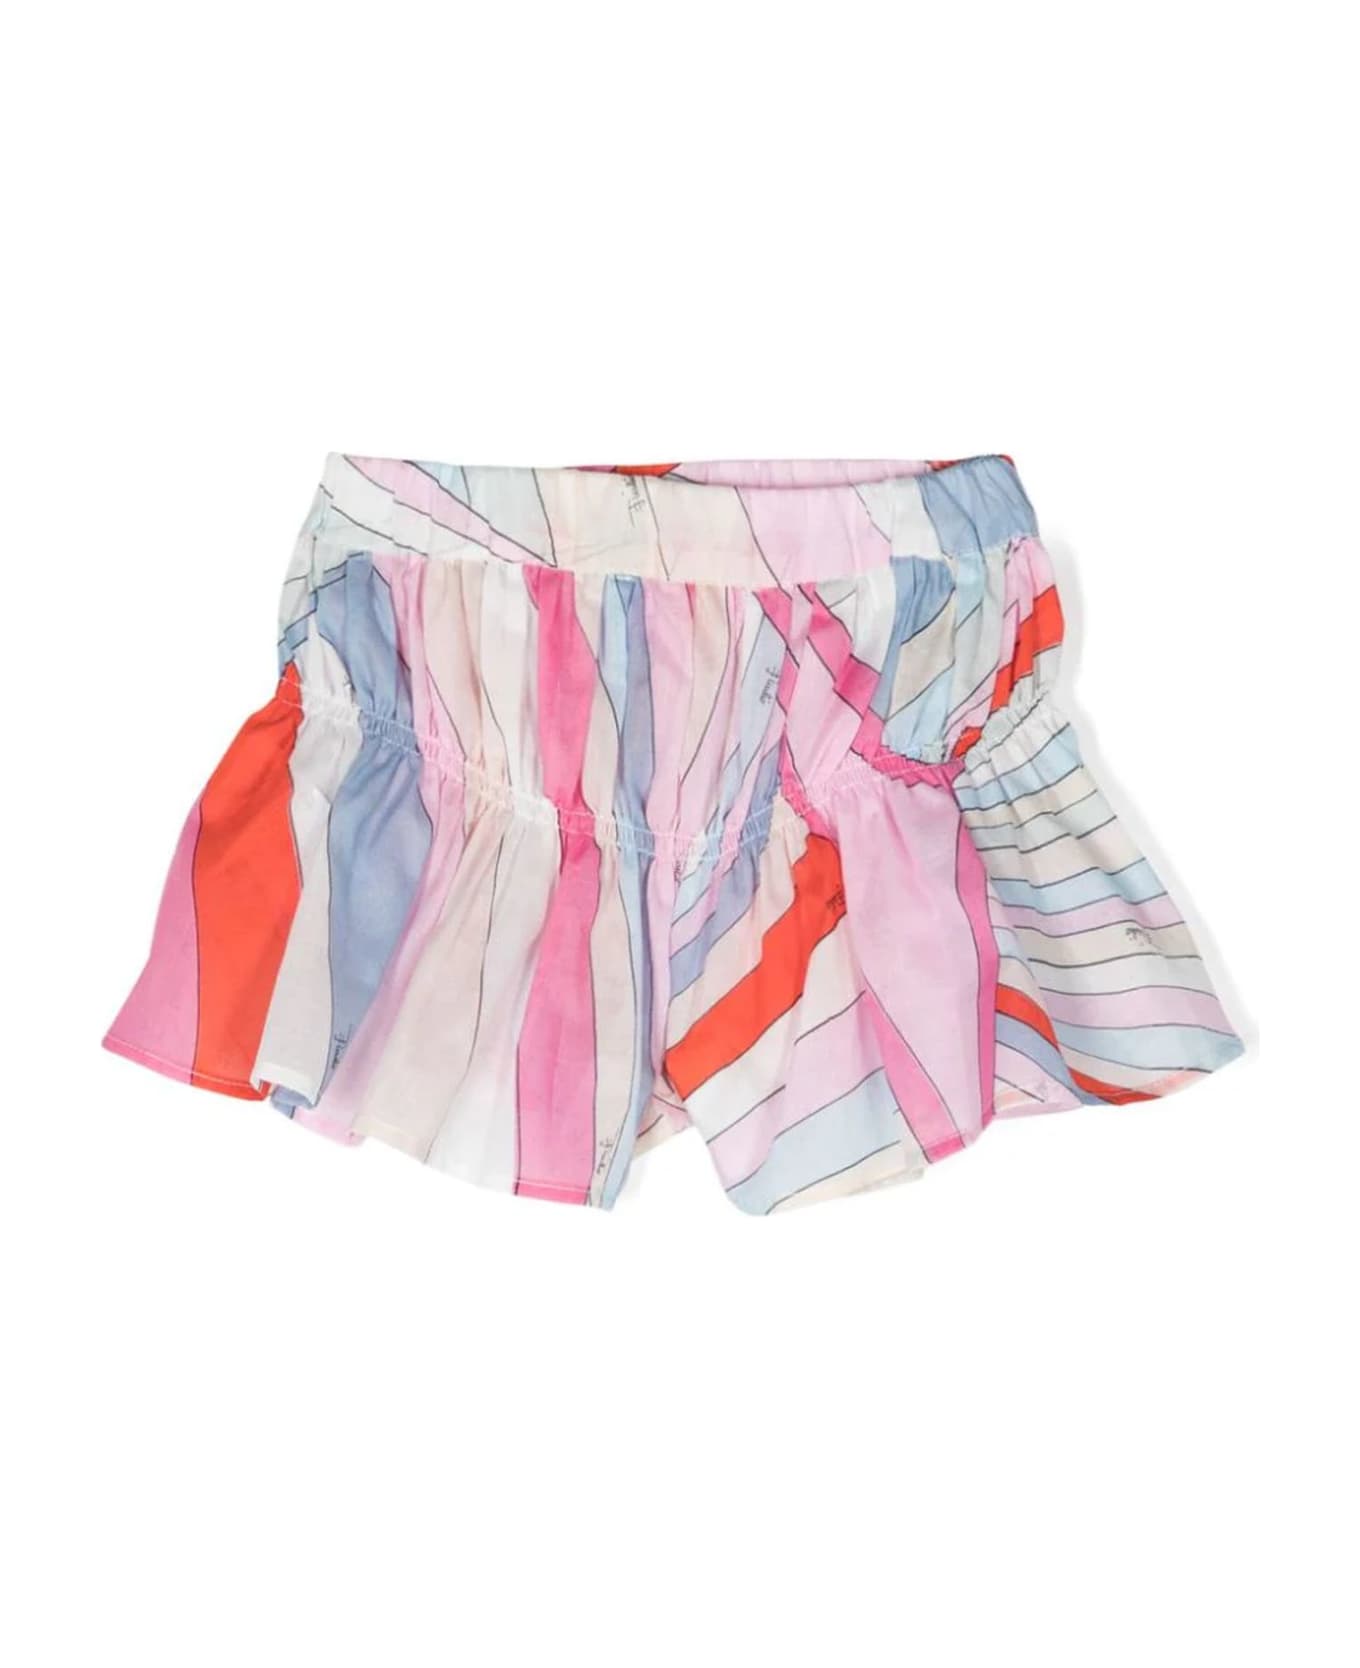 Pucci Emilio Pucci Shorts Pink - Pink ボトムス